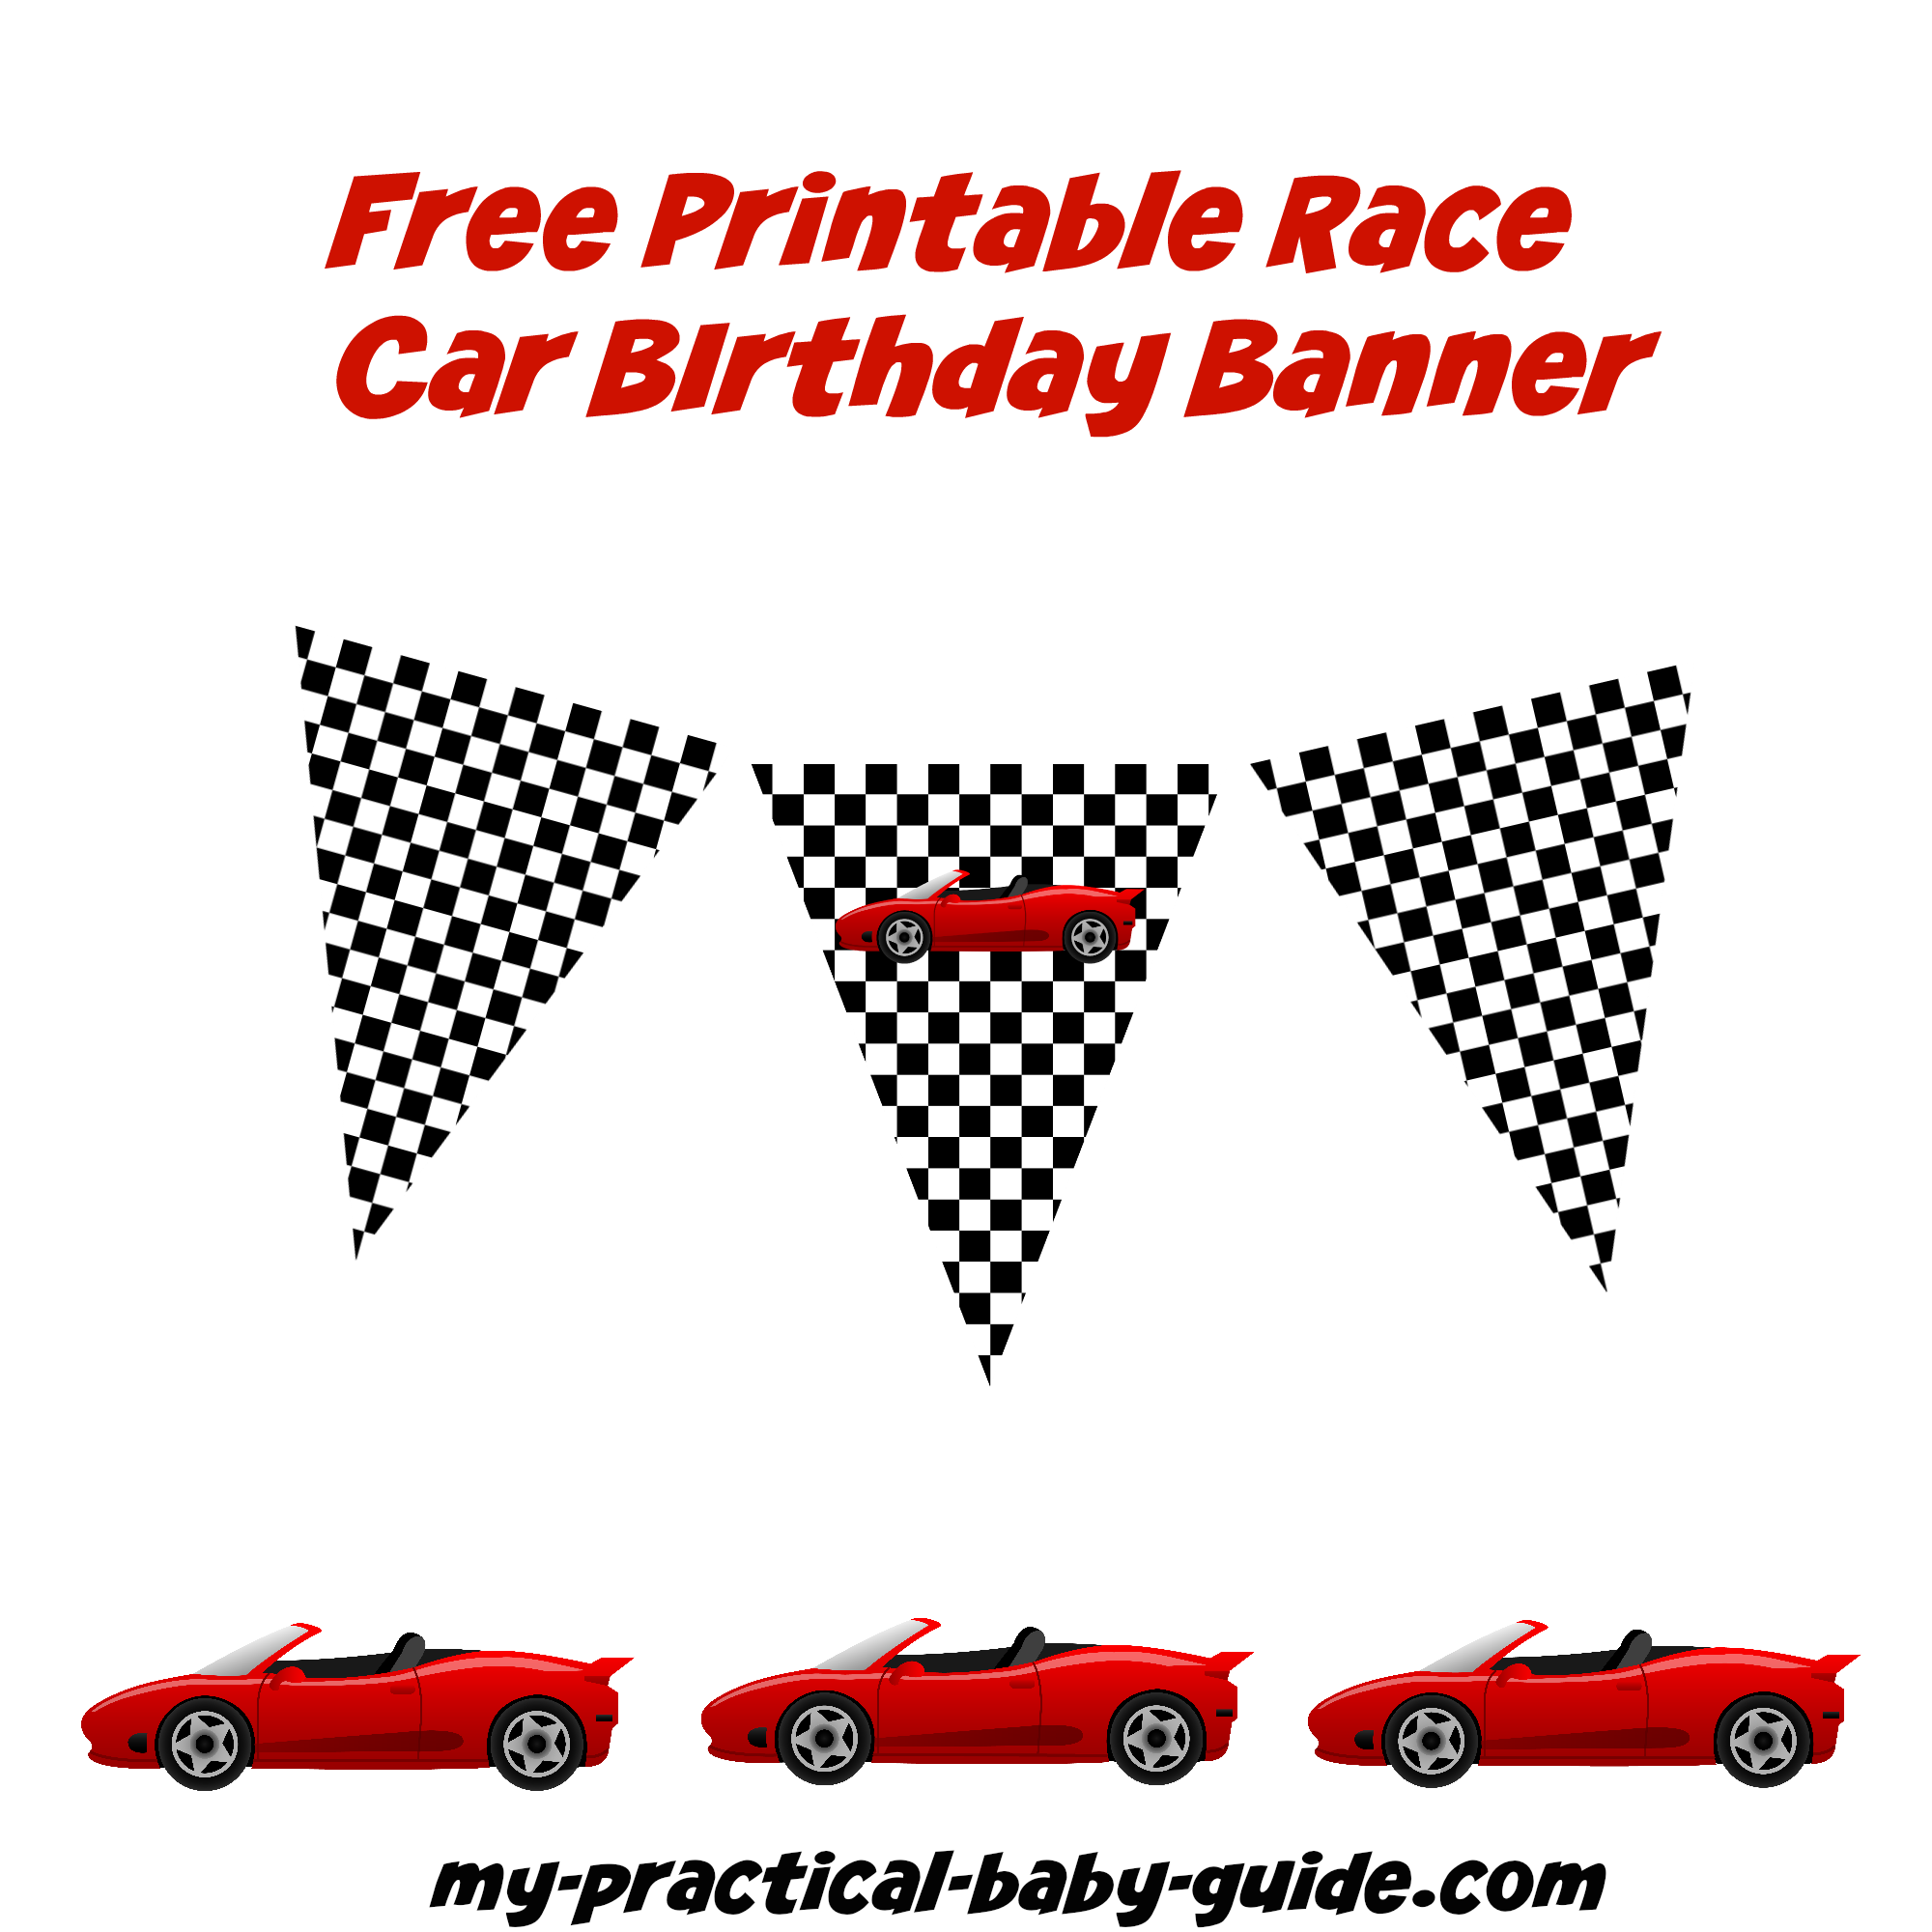 Free Printable Race Car Birthday Banner